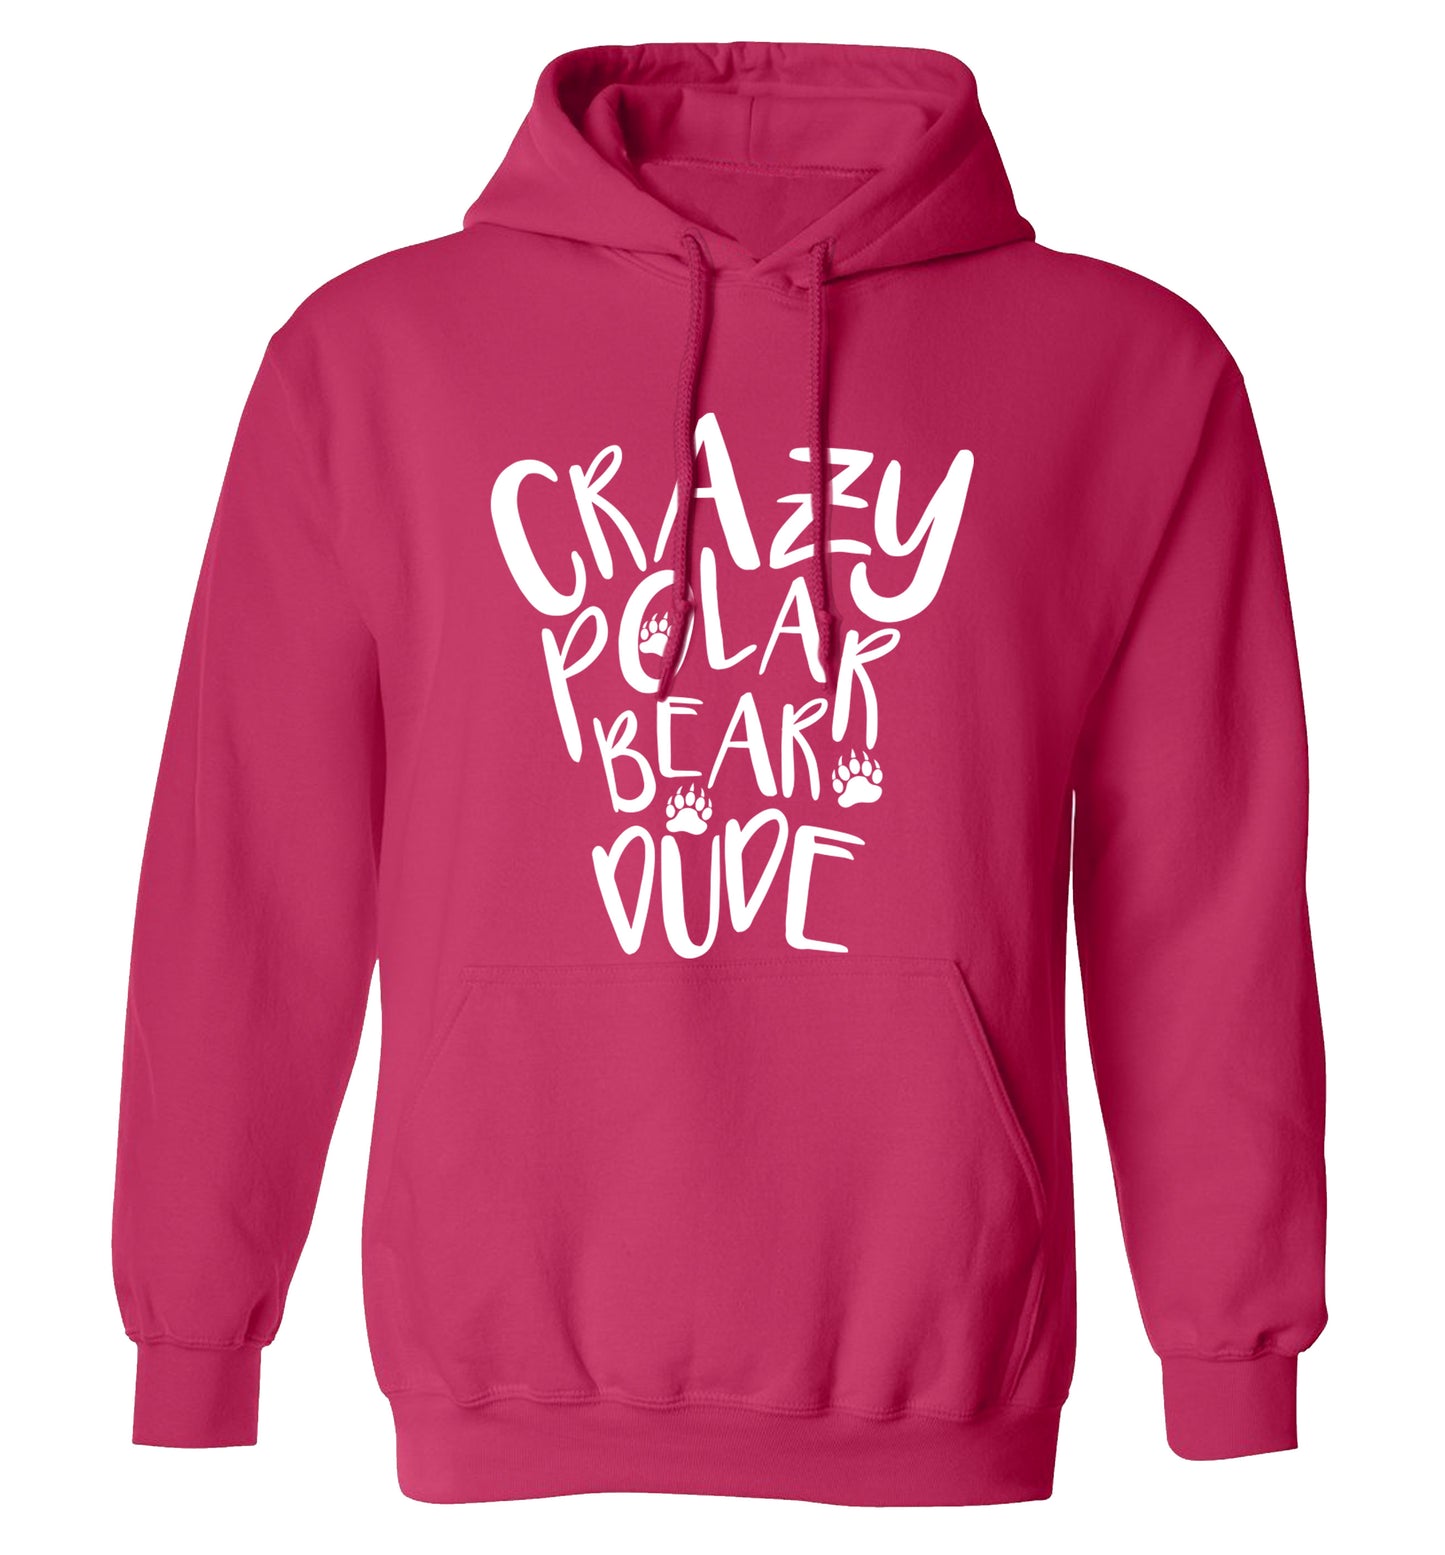 Crazy polar bear dude adults unisex pink hoodie 2XL